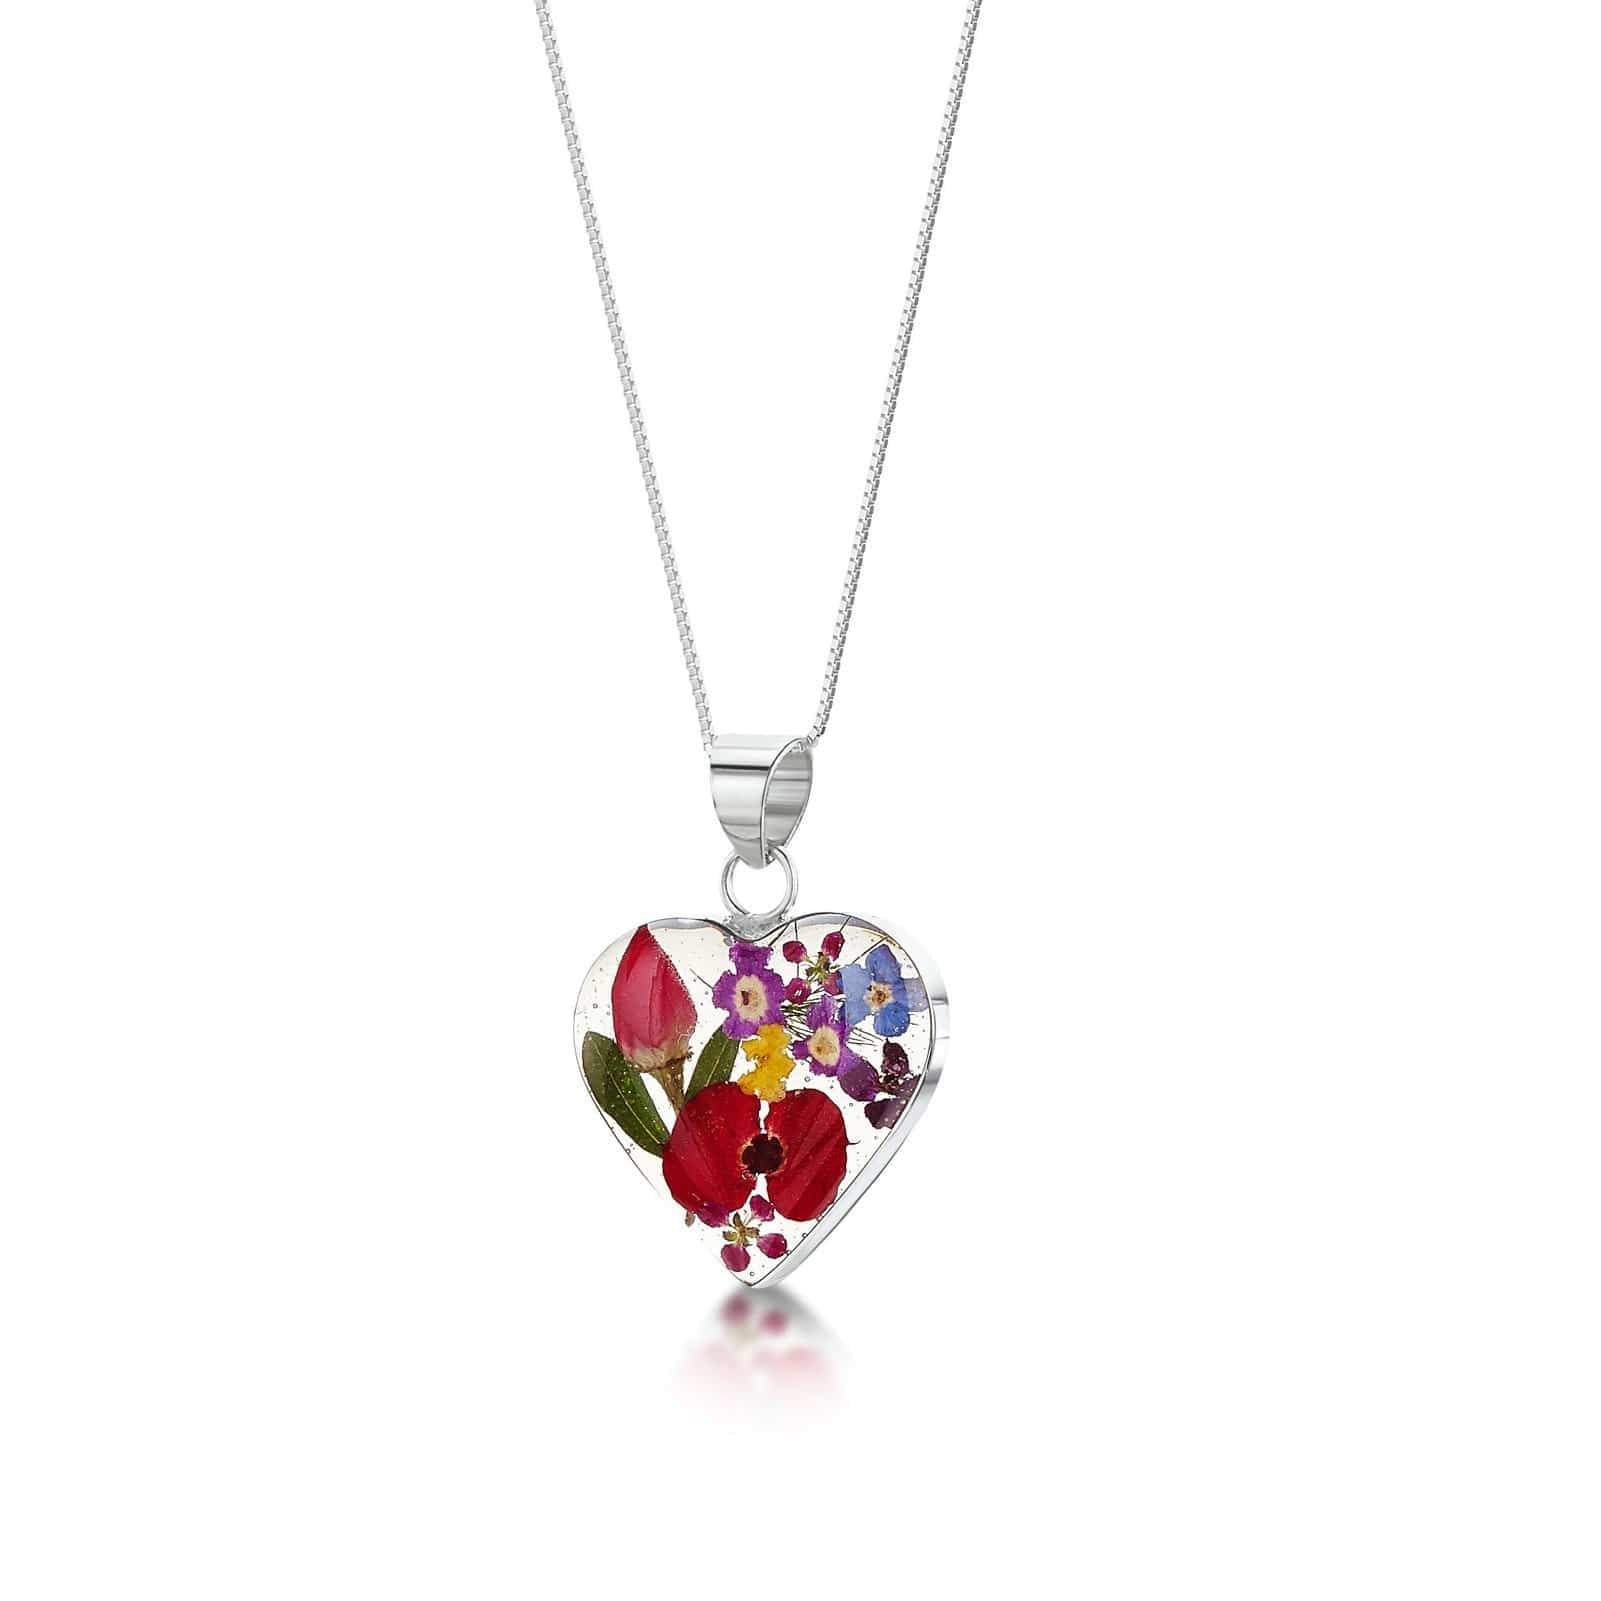 https://cdn.shopify.com/s/files/1/0321/8223/9291/products/shrieking-violet-necklace-heart-silver-necklace-15008721666107_1800x1800.jpg?v=1593563612